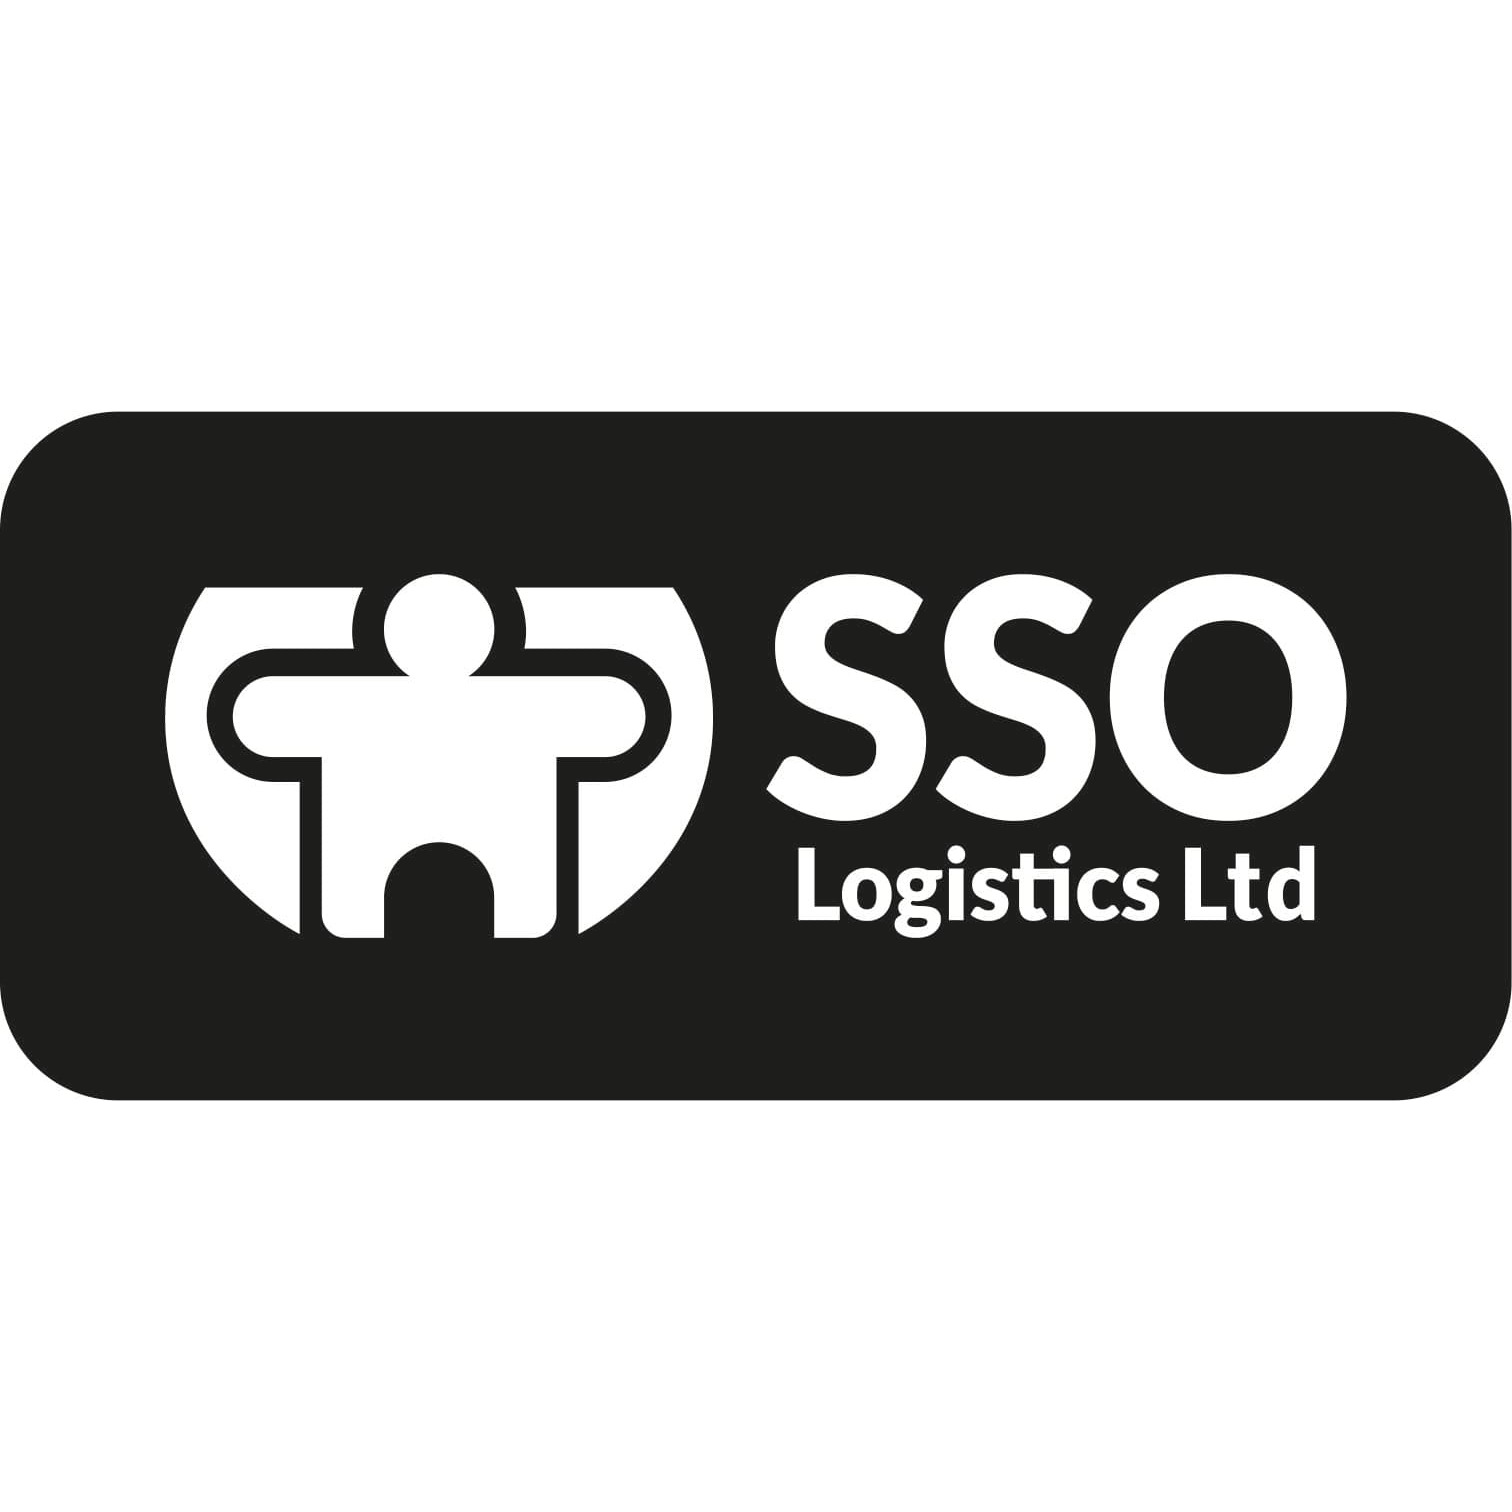 SSO Logistics Ltd - St. Helens, Merseyside WA11 9SR - 01744 416999 | ShowMeLocal.com